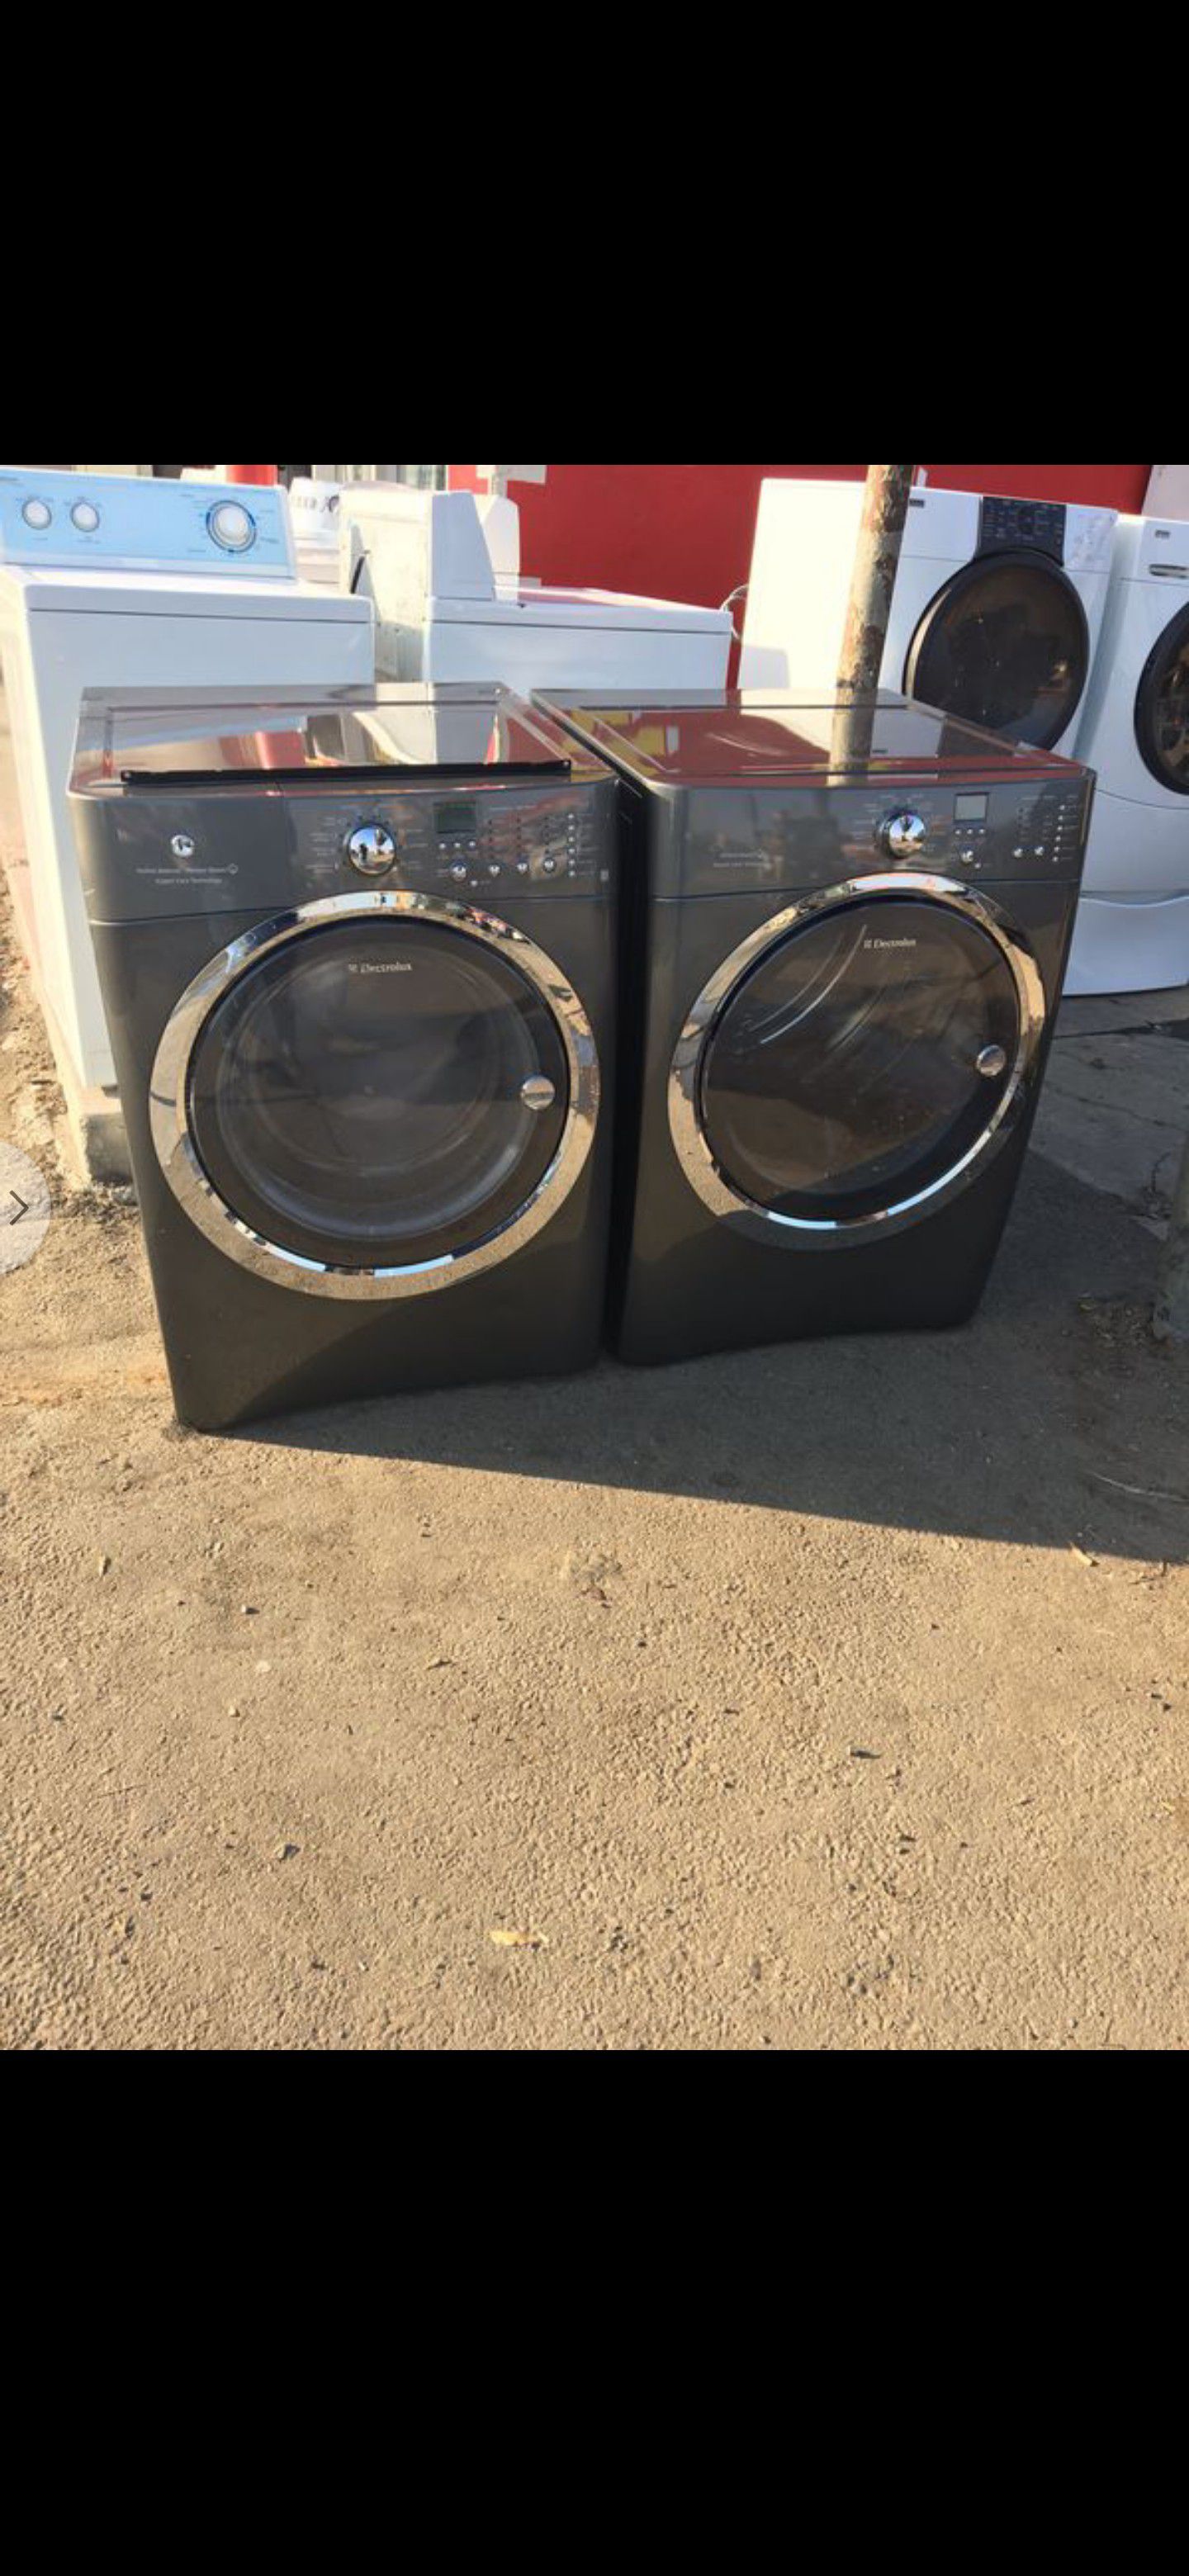 Electrolux Frontload Washer & Dryer Set